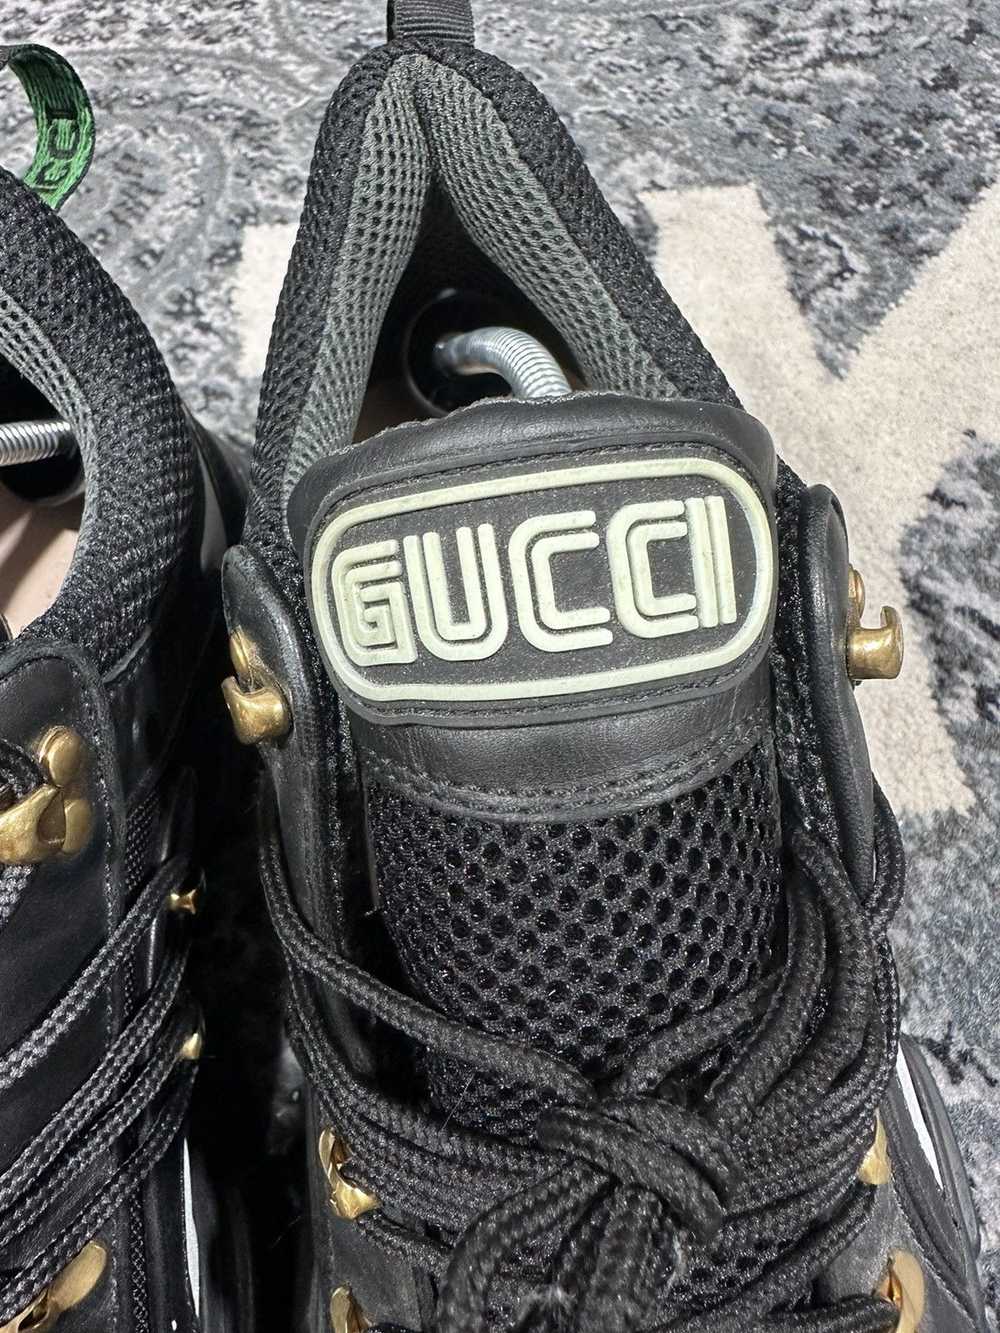 Gucci Gucci Flashtrek Sneakers Size 11G (12US) - image 6